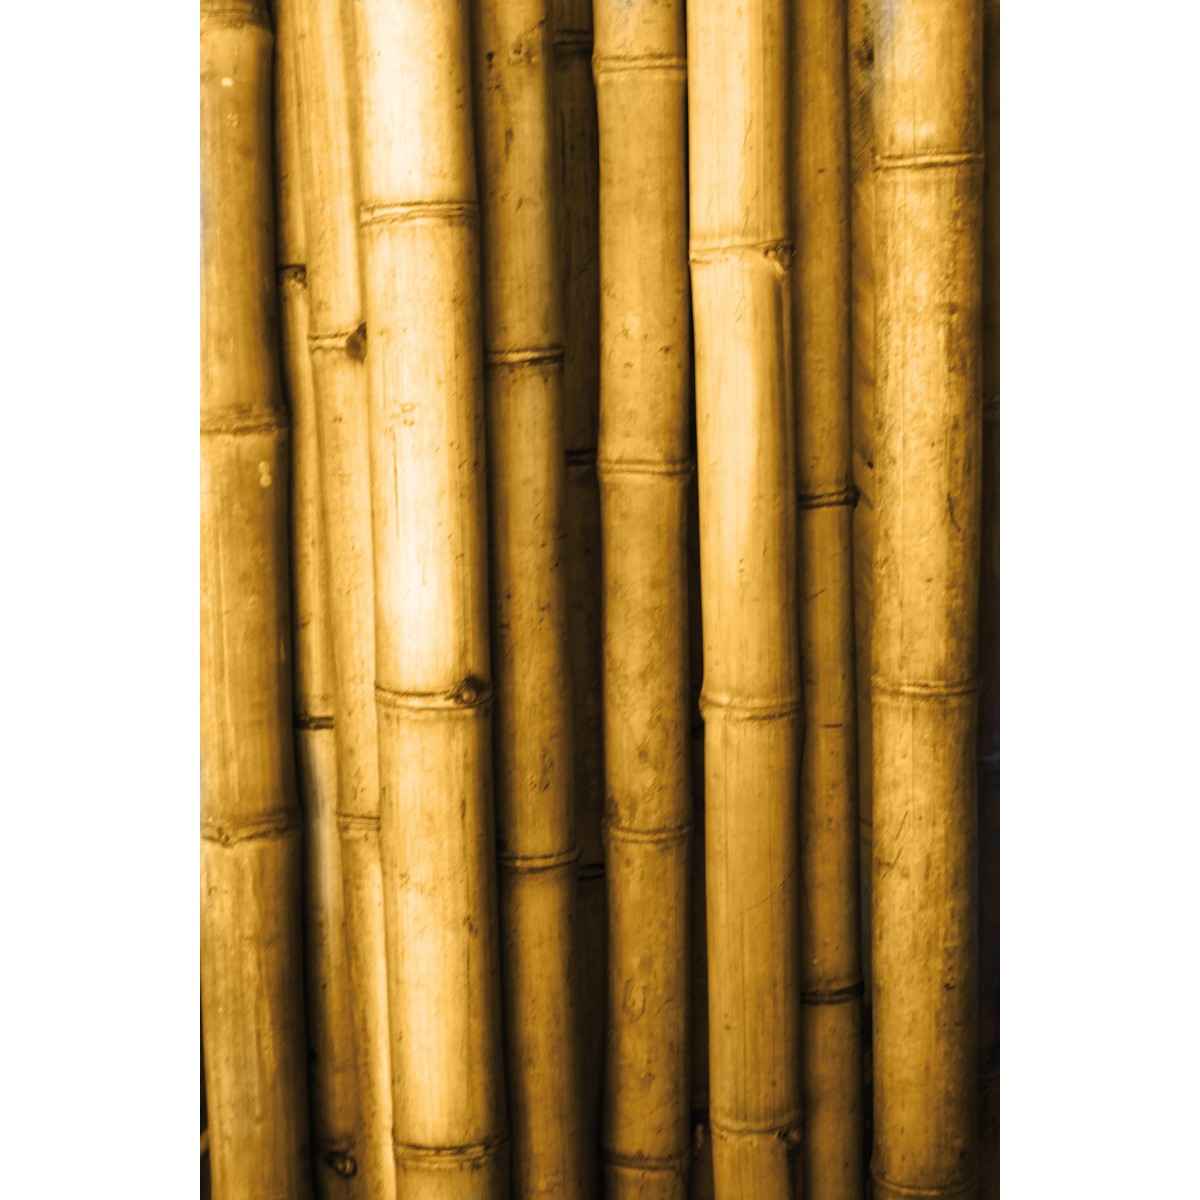 Schilliger Sélection Bamboo poles & sticks Bambou asiastyle 8-11  200x11x11cm